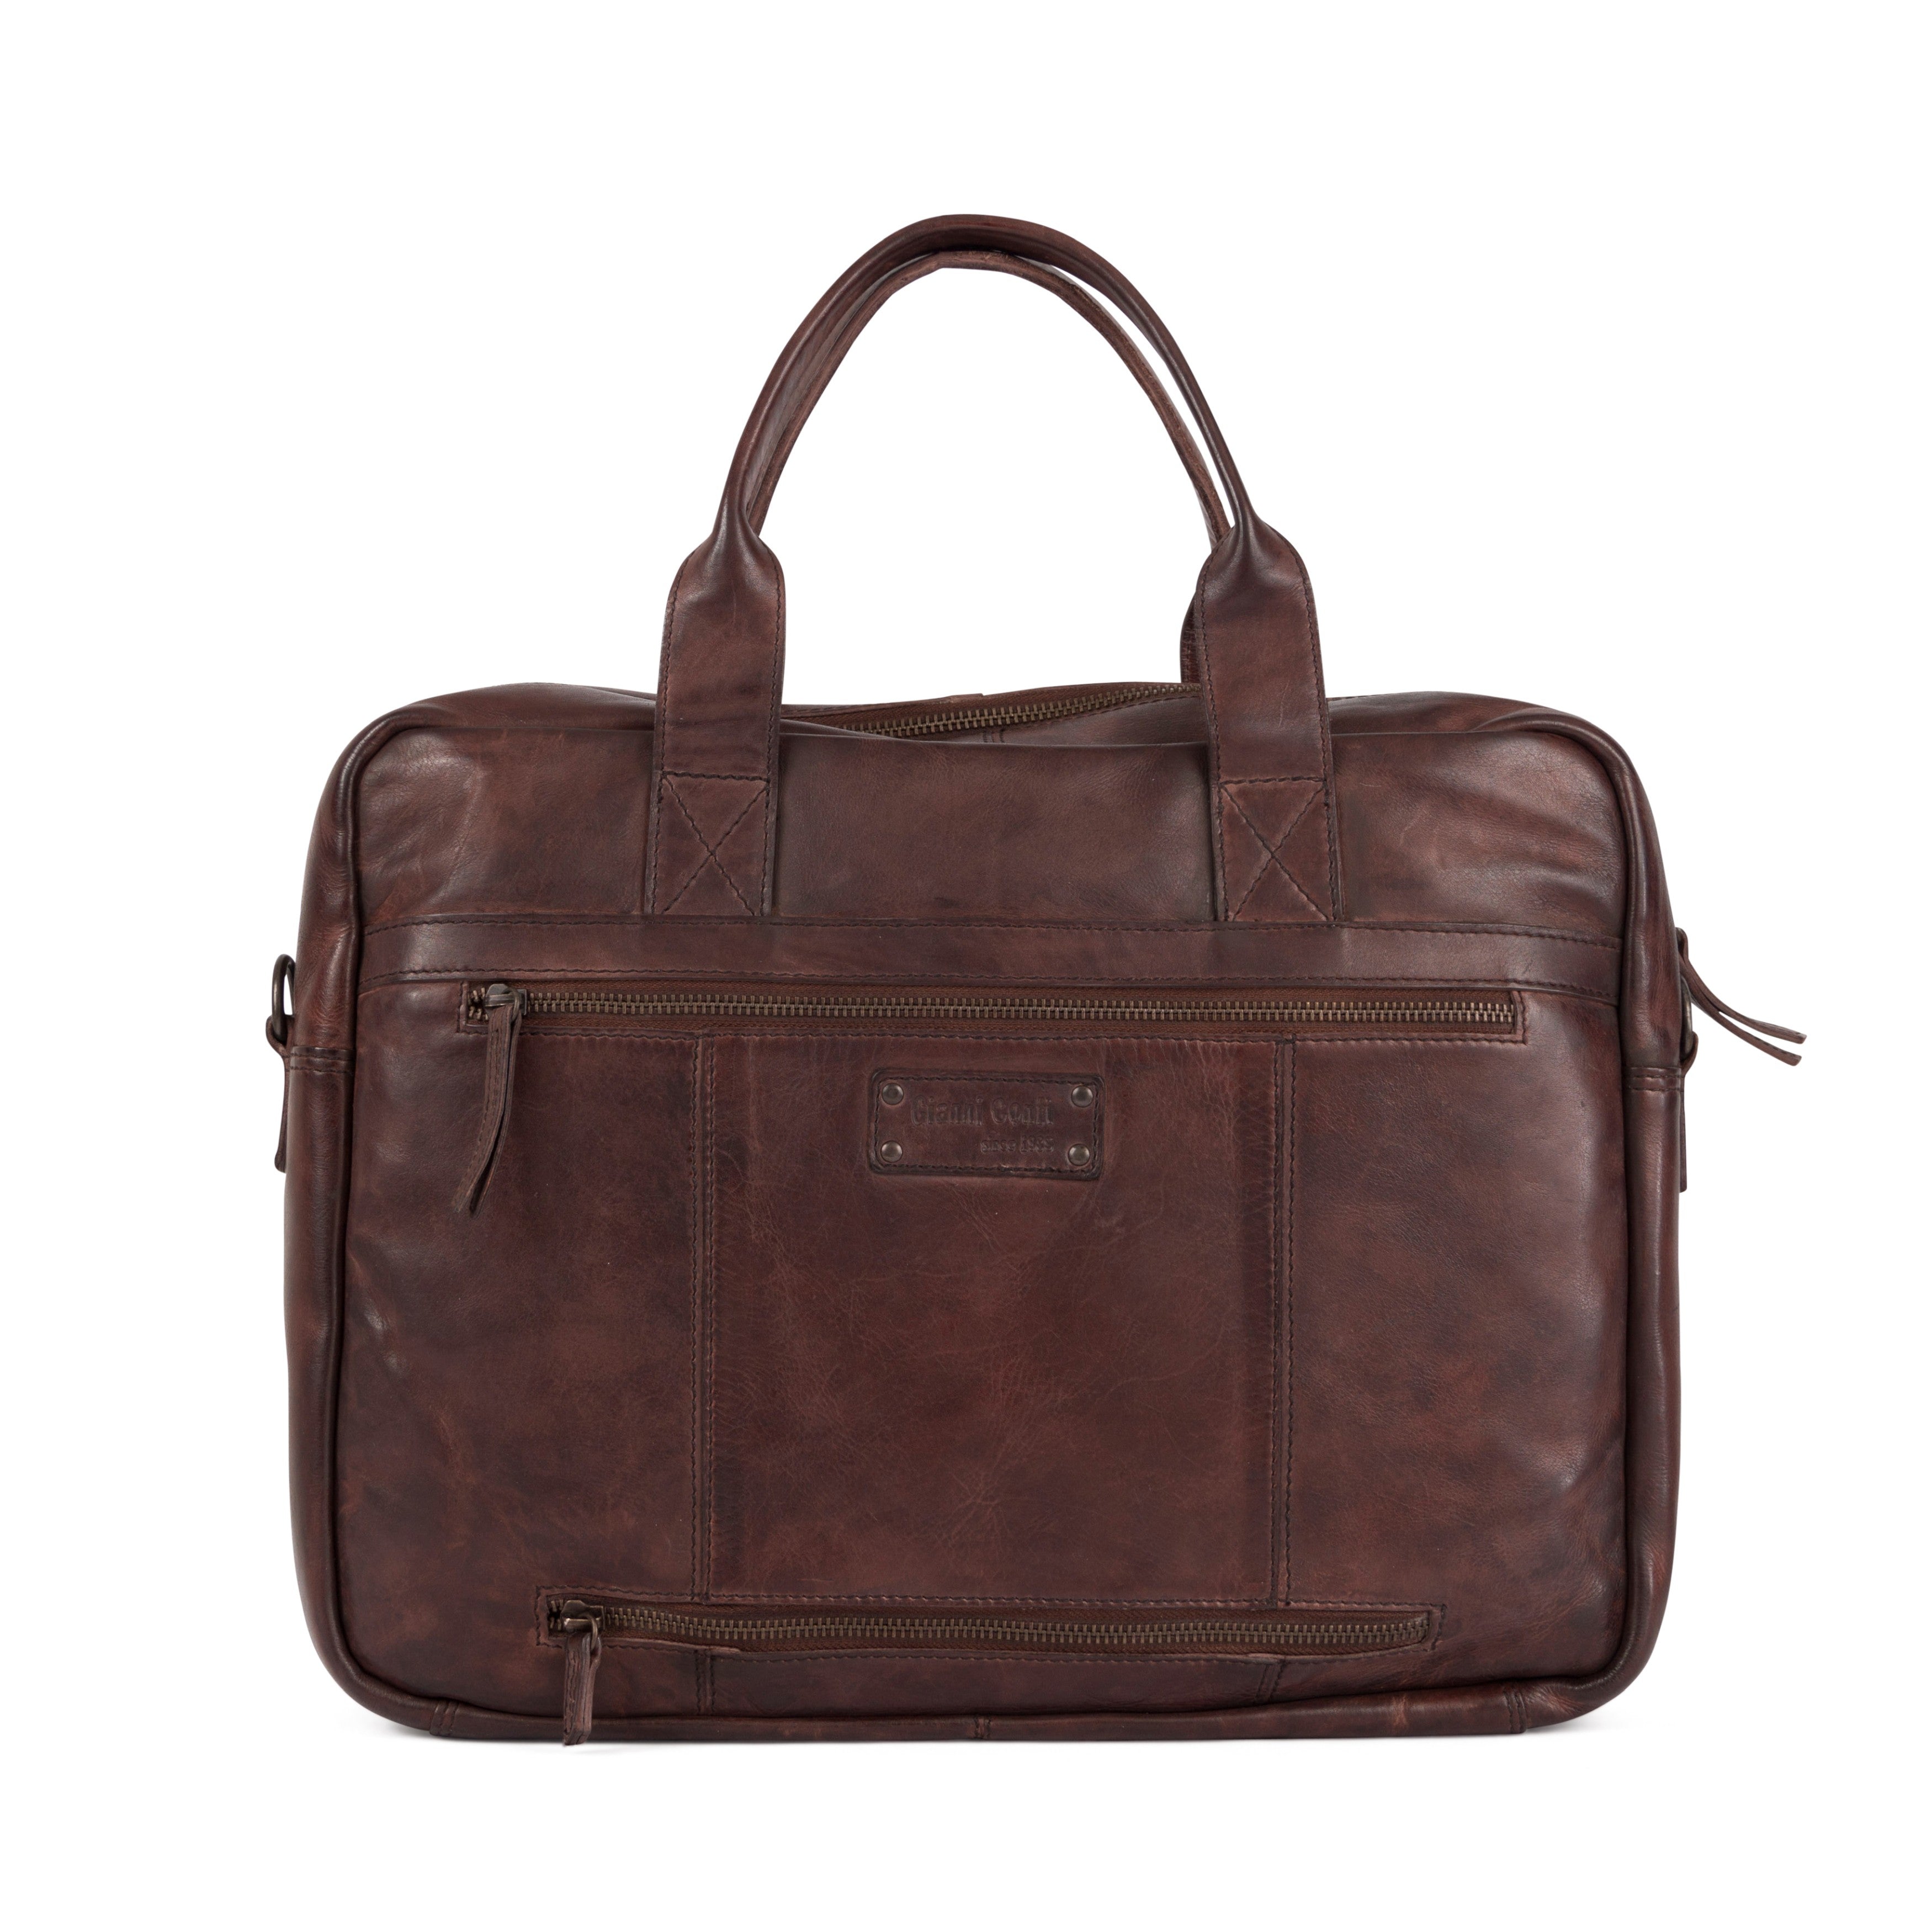 Gianni Conti Italian Leather Briefcase 4101266